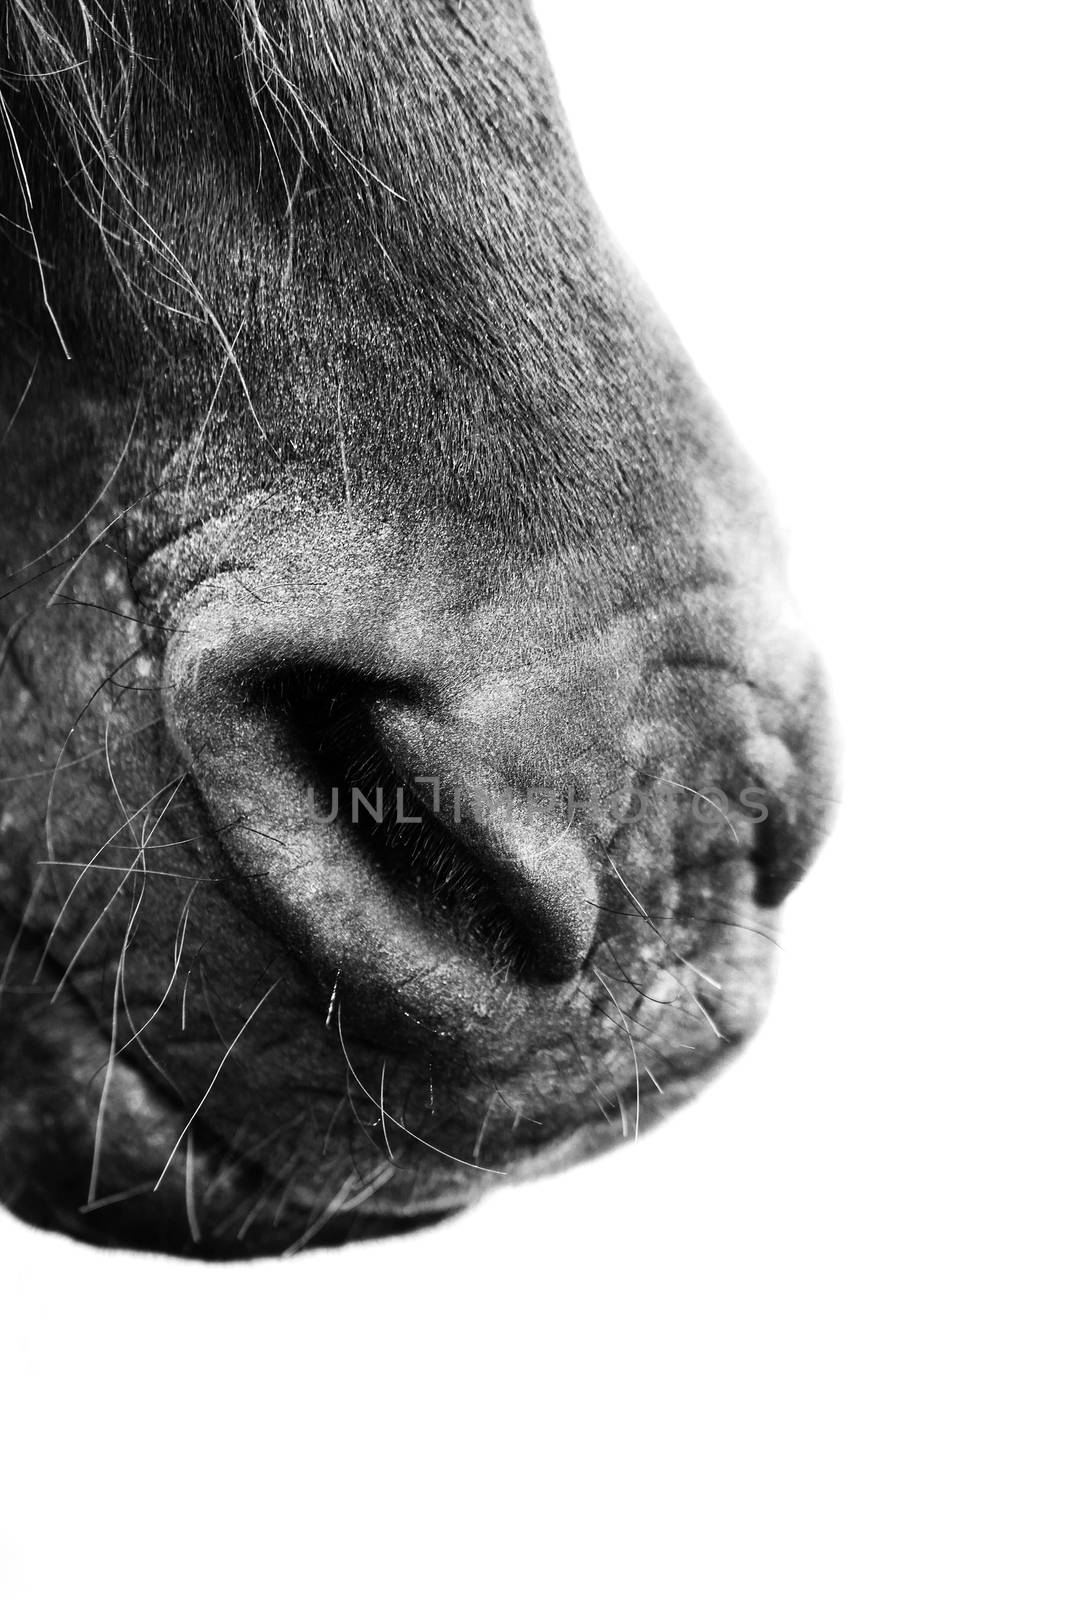 Nose of horse close up macro isolated on white